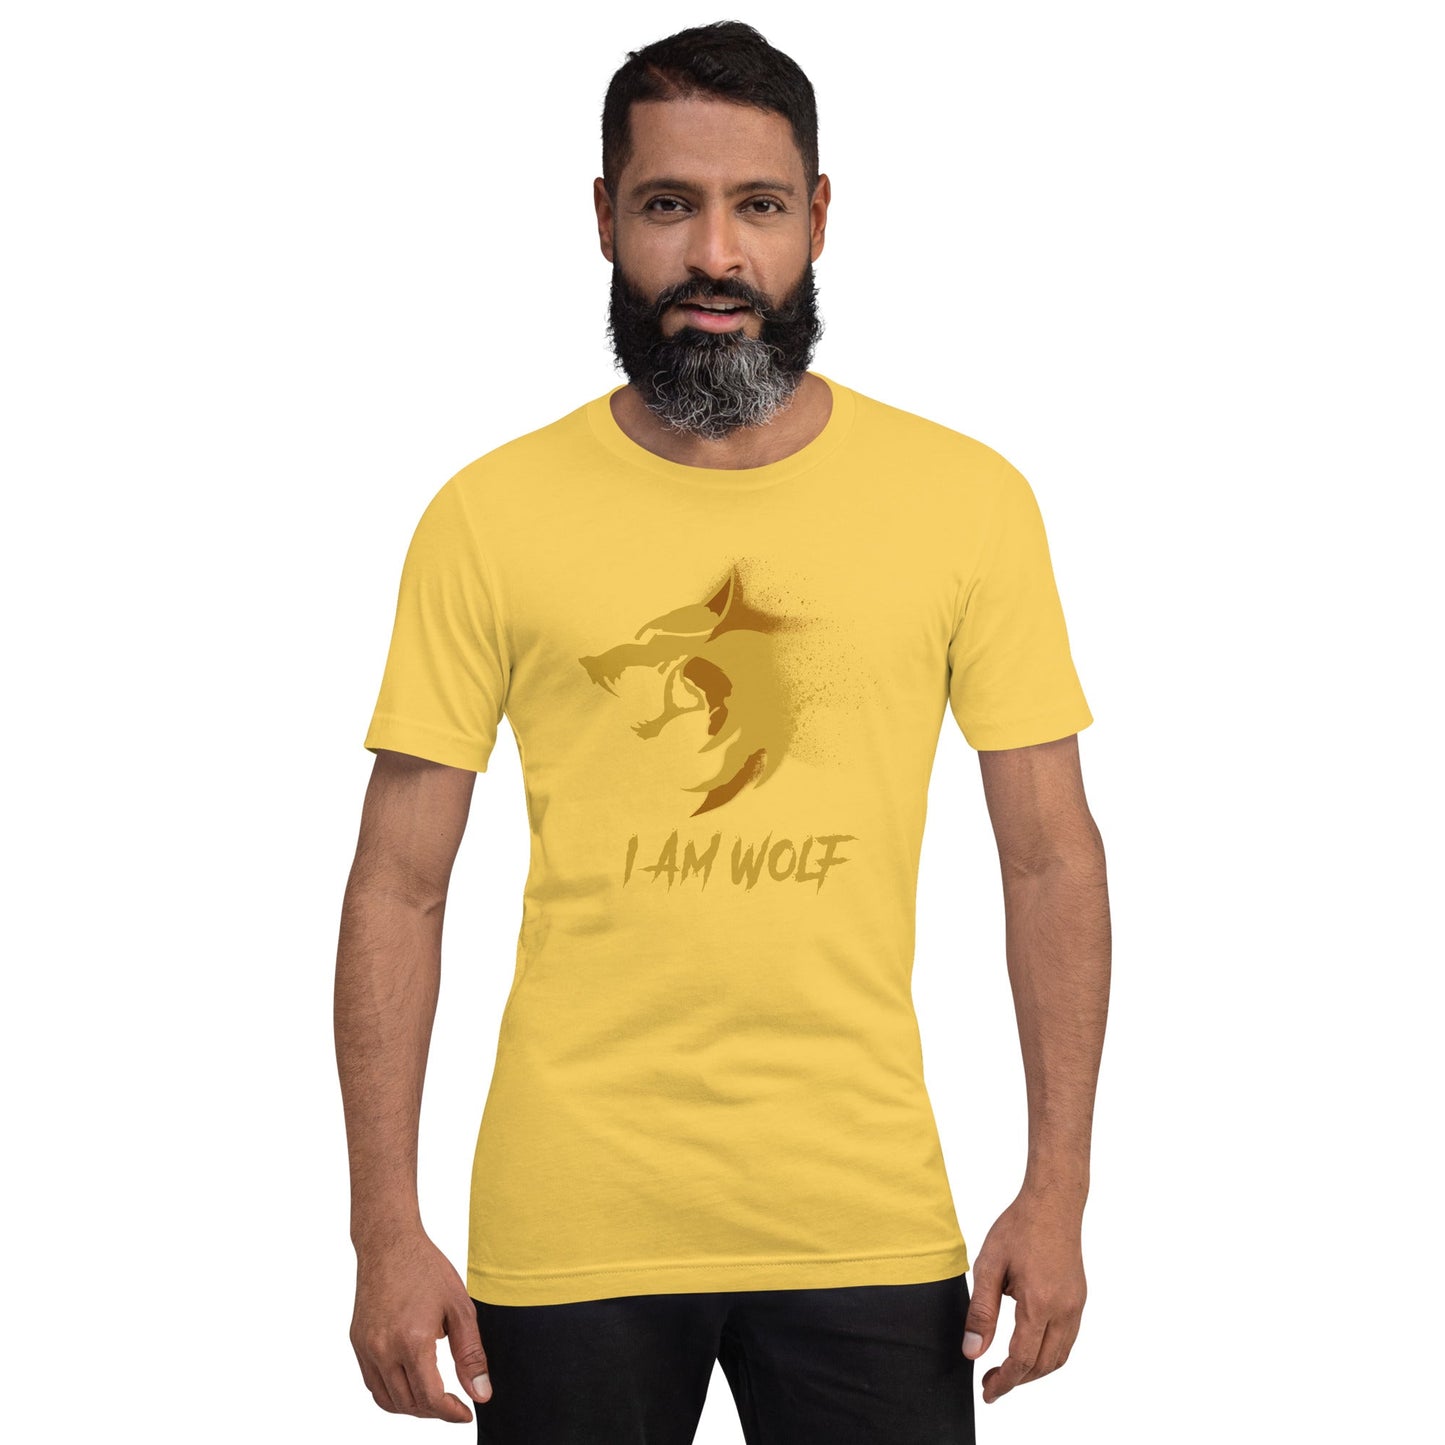 I AM WOLF Graphic T-Shirt